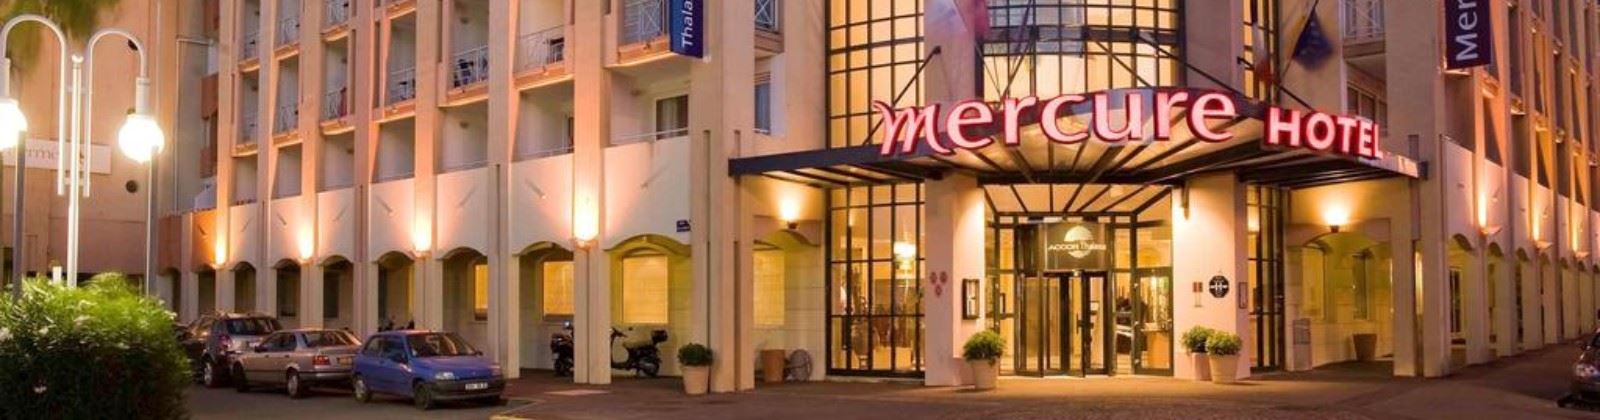 OLEVENE image - mercure-thalassa-port-frejus-olevene-hotel-restaurant-evenement-